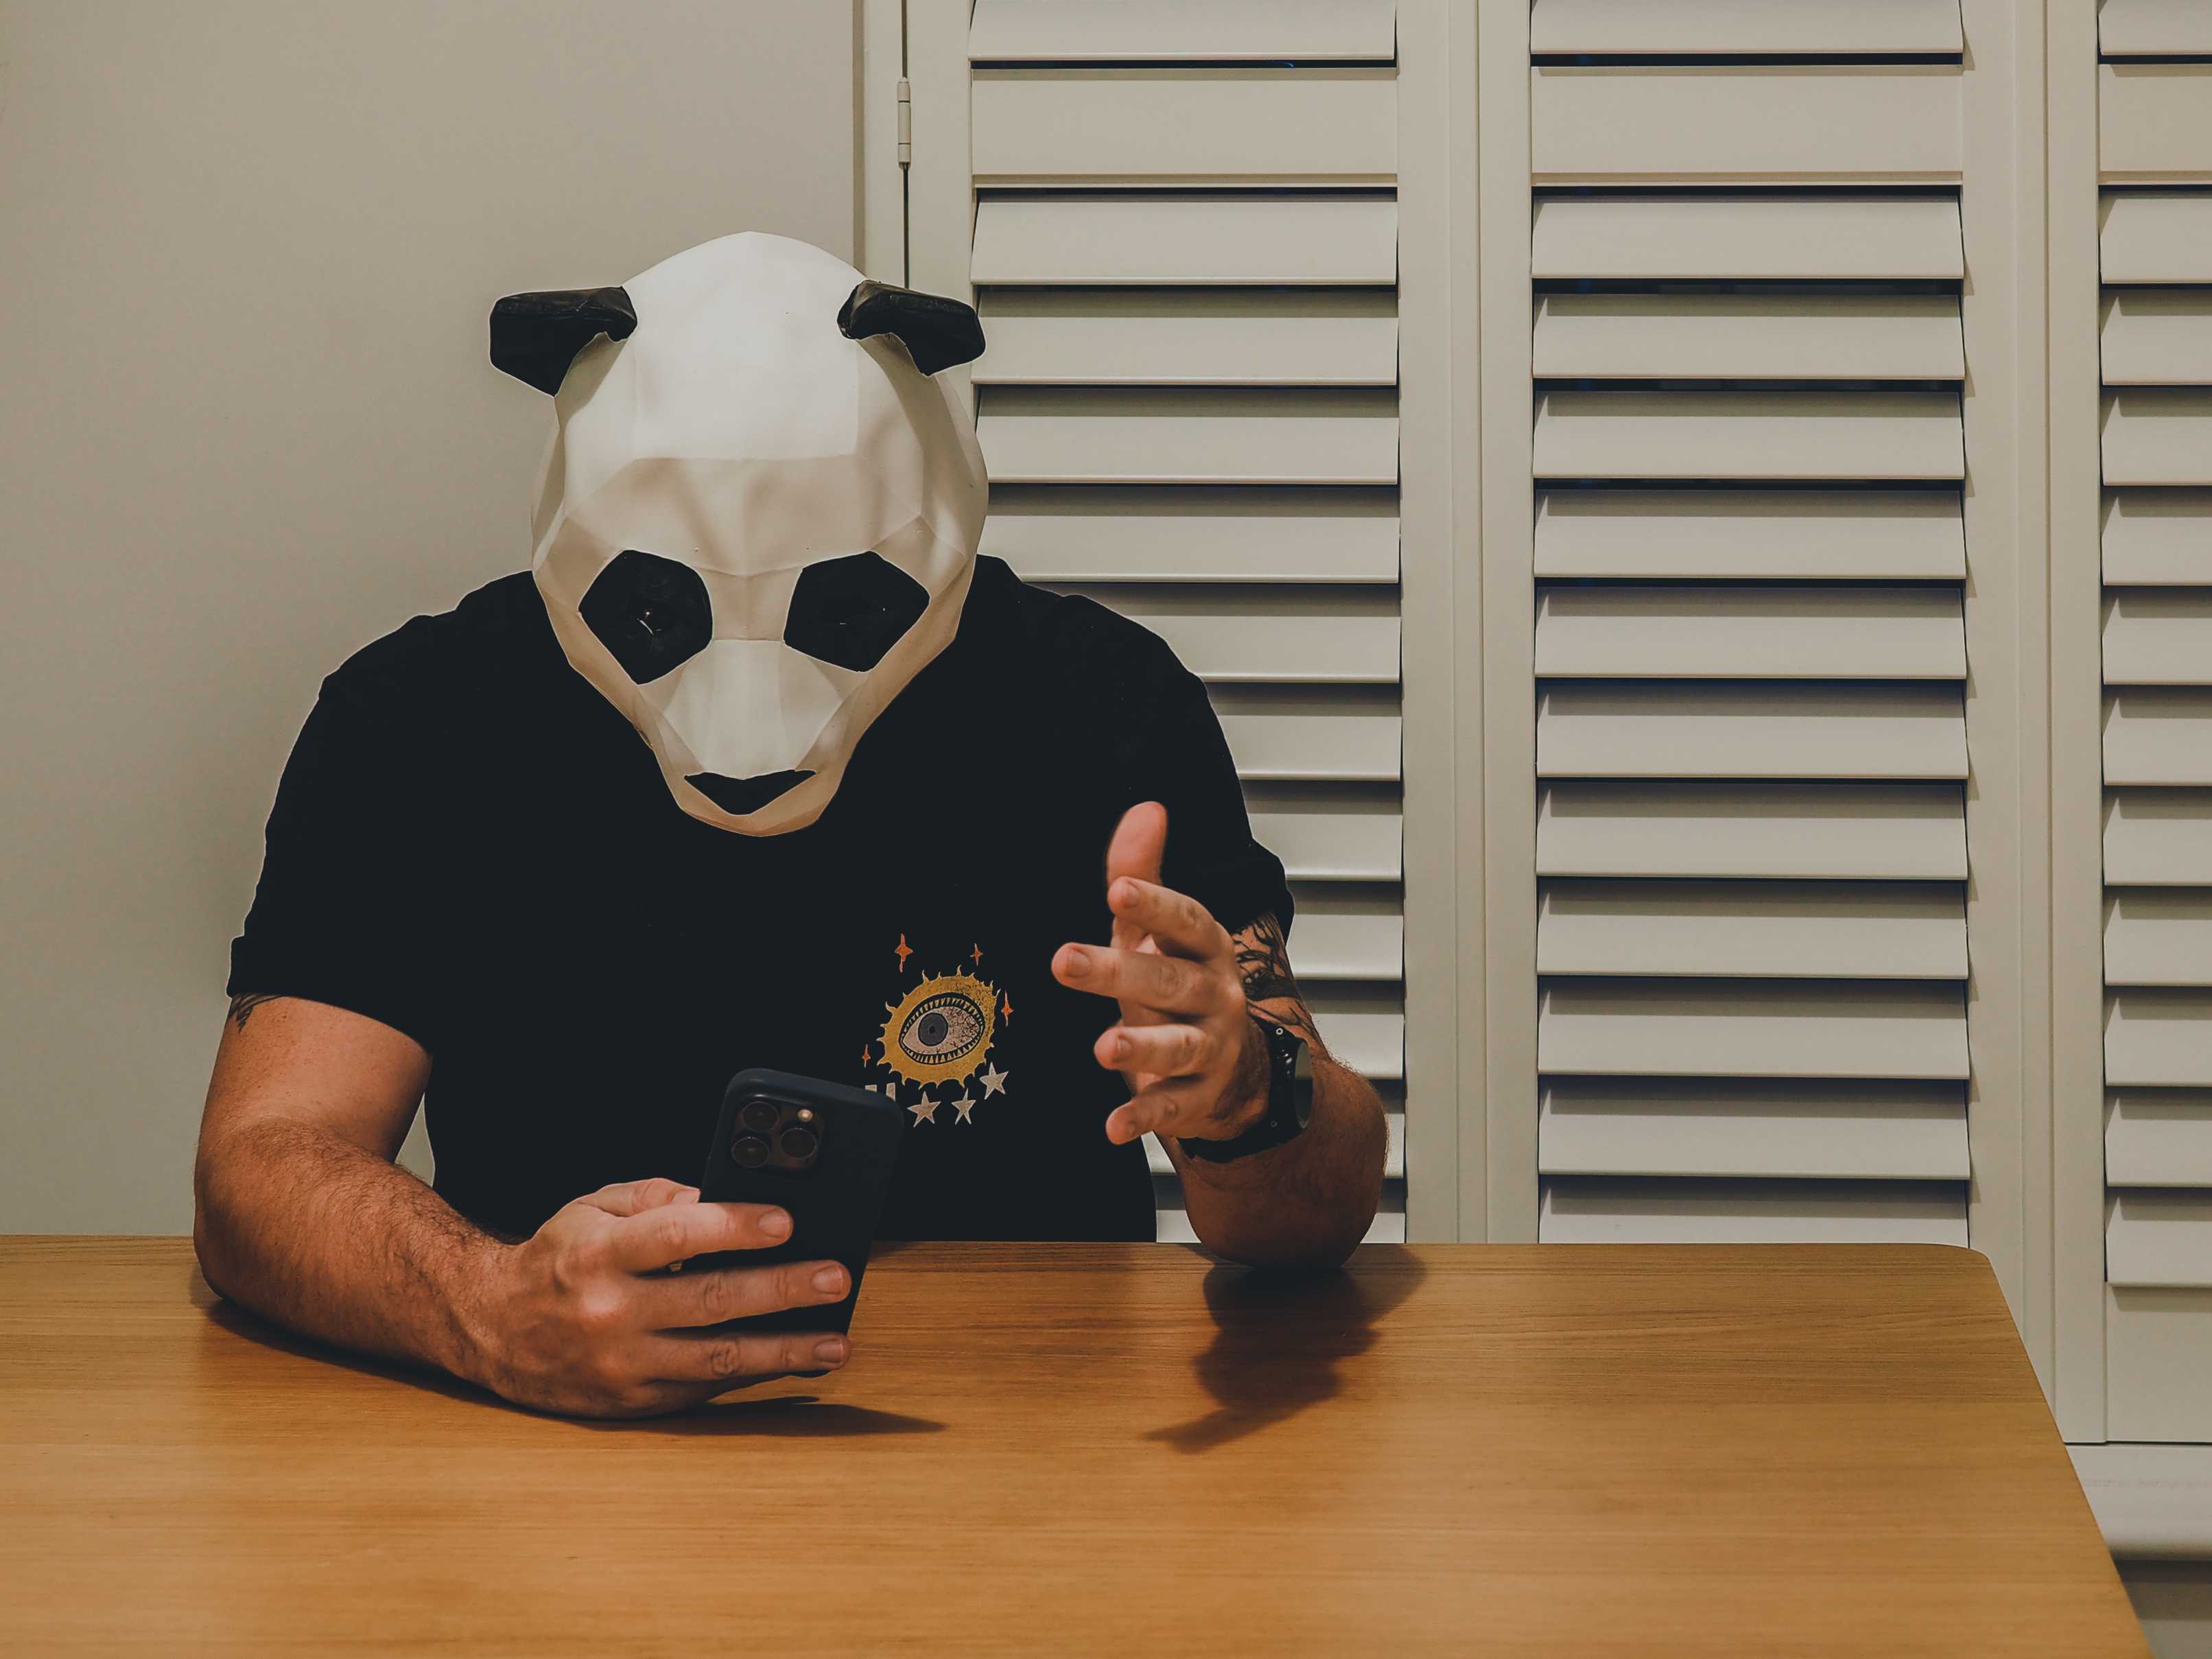 I sit at the table weaking a panda mask, staring at my phone